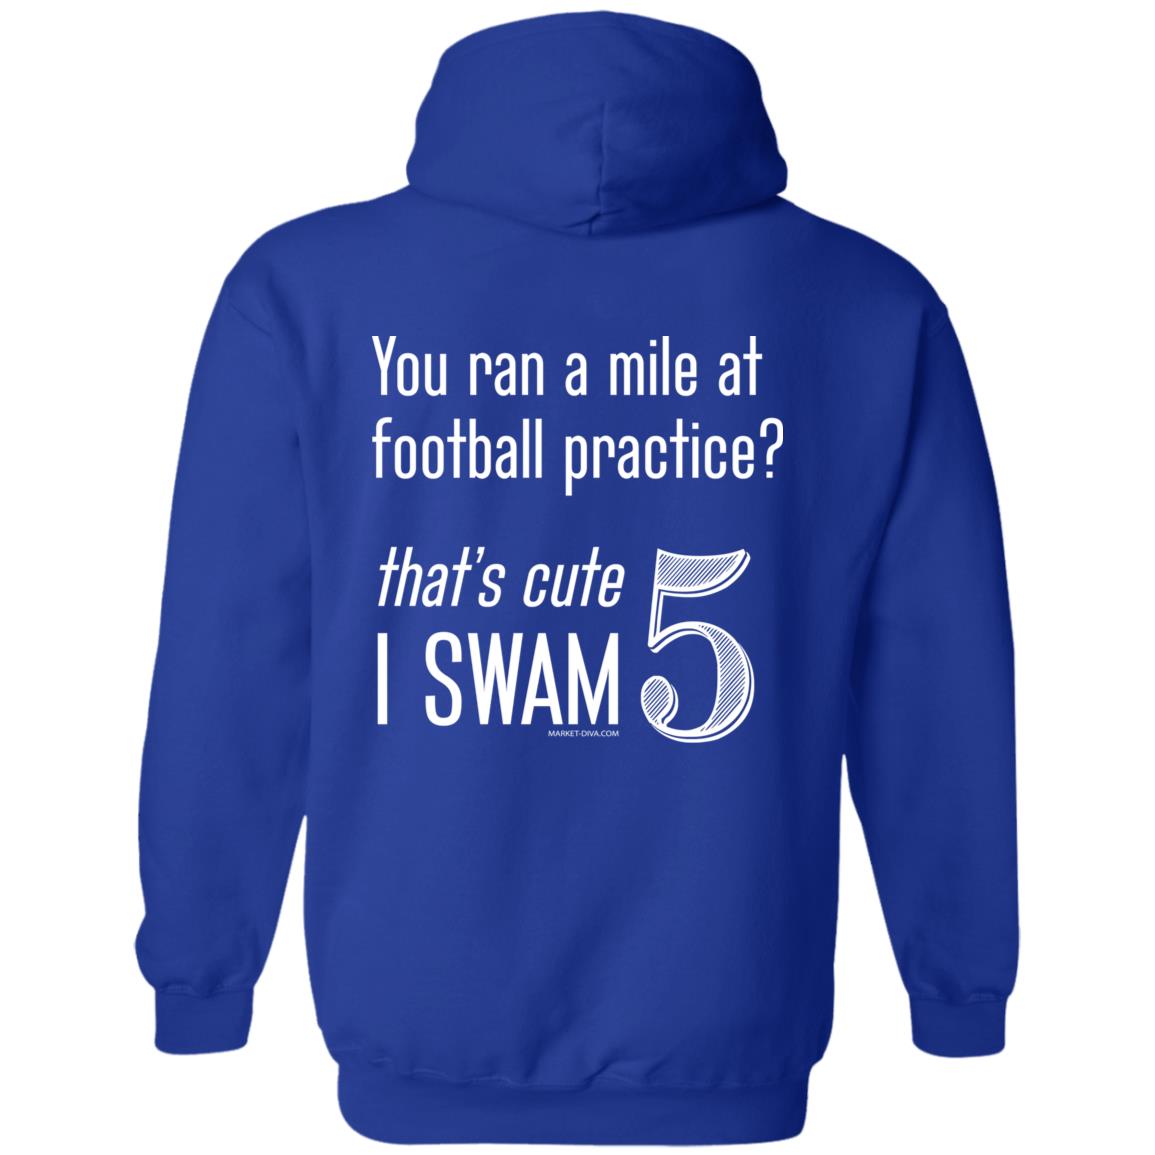 Hoodie: I Swam 5